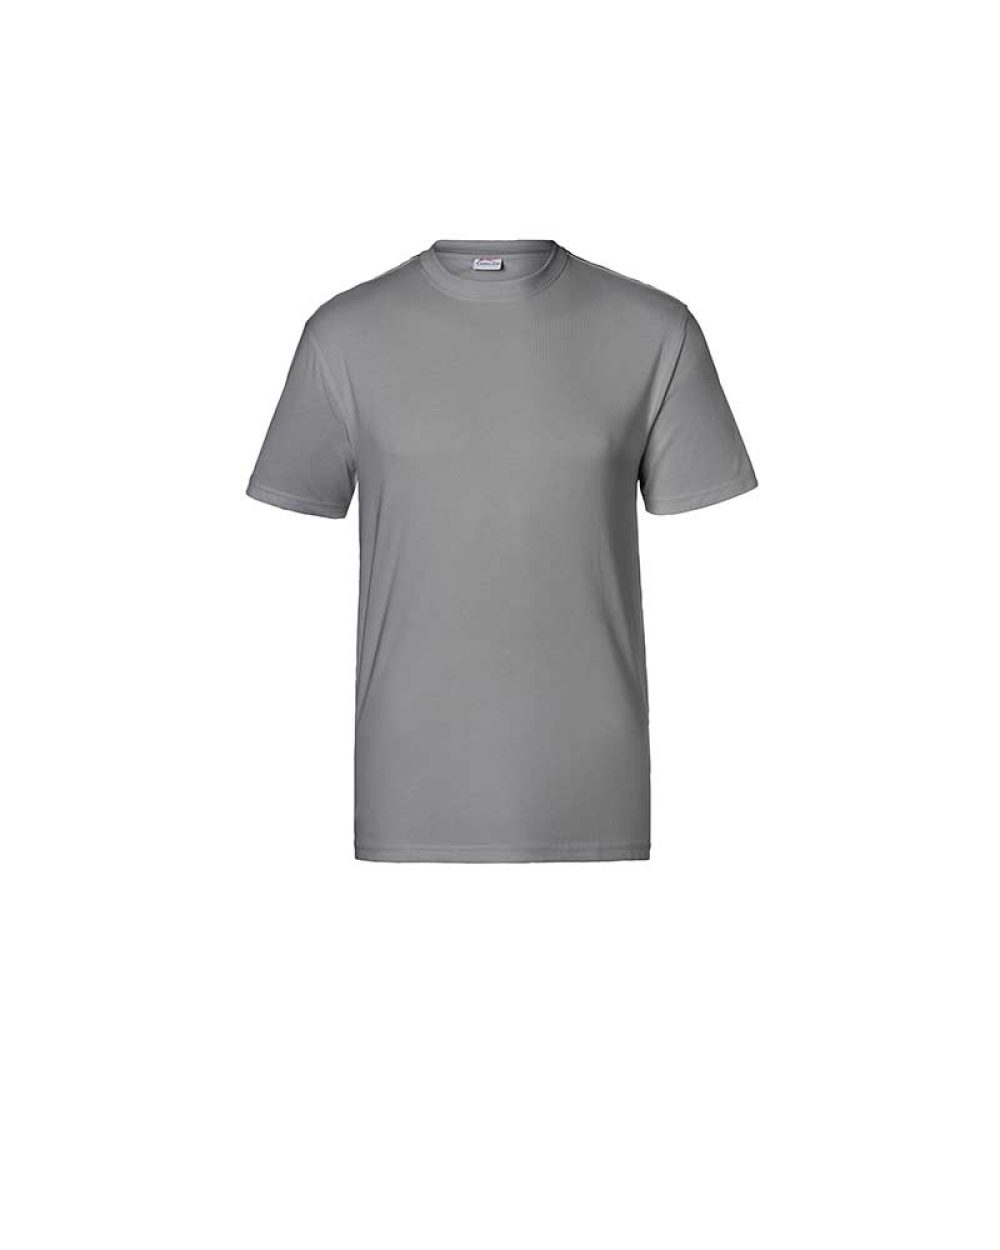 kuebler-t-shirt-shirts-5124-6538-95